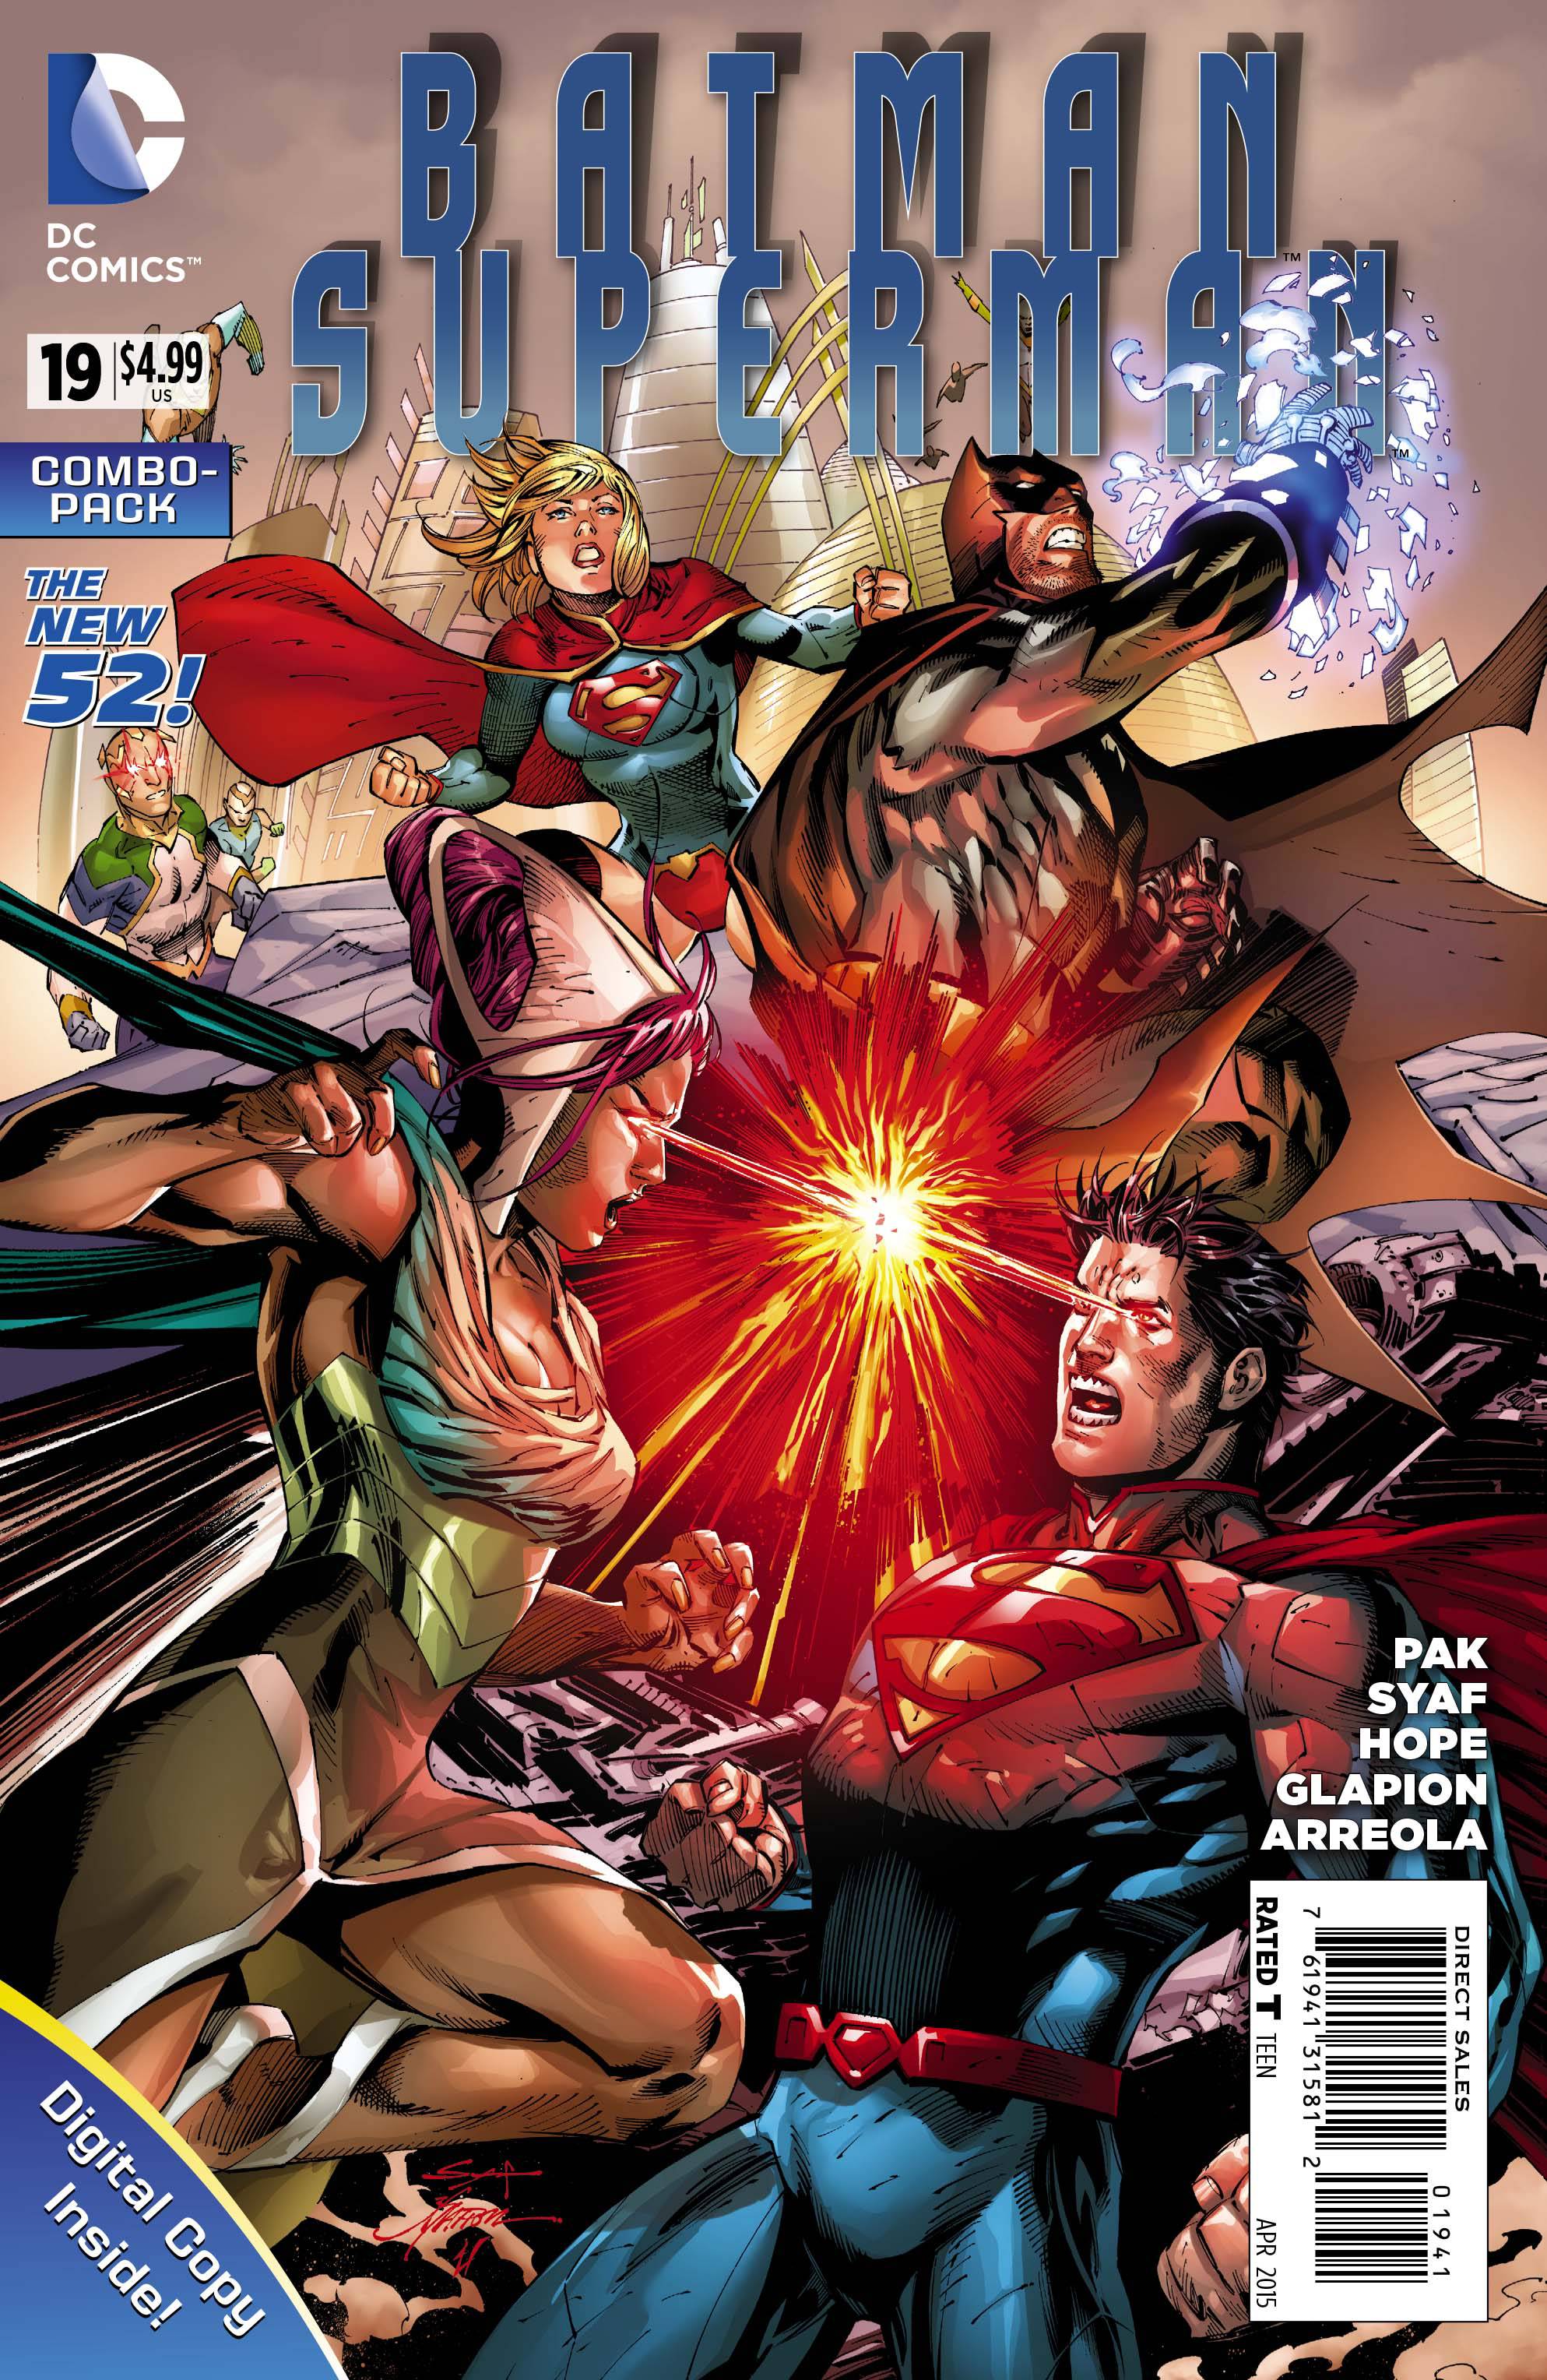 Batman Superman #19 (2013) Combo Pack